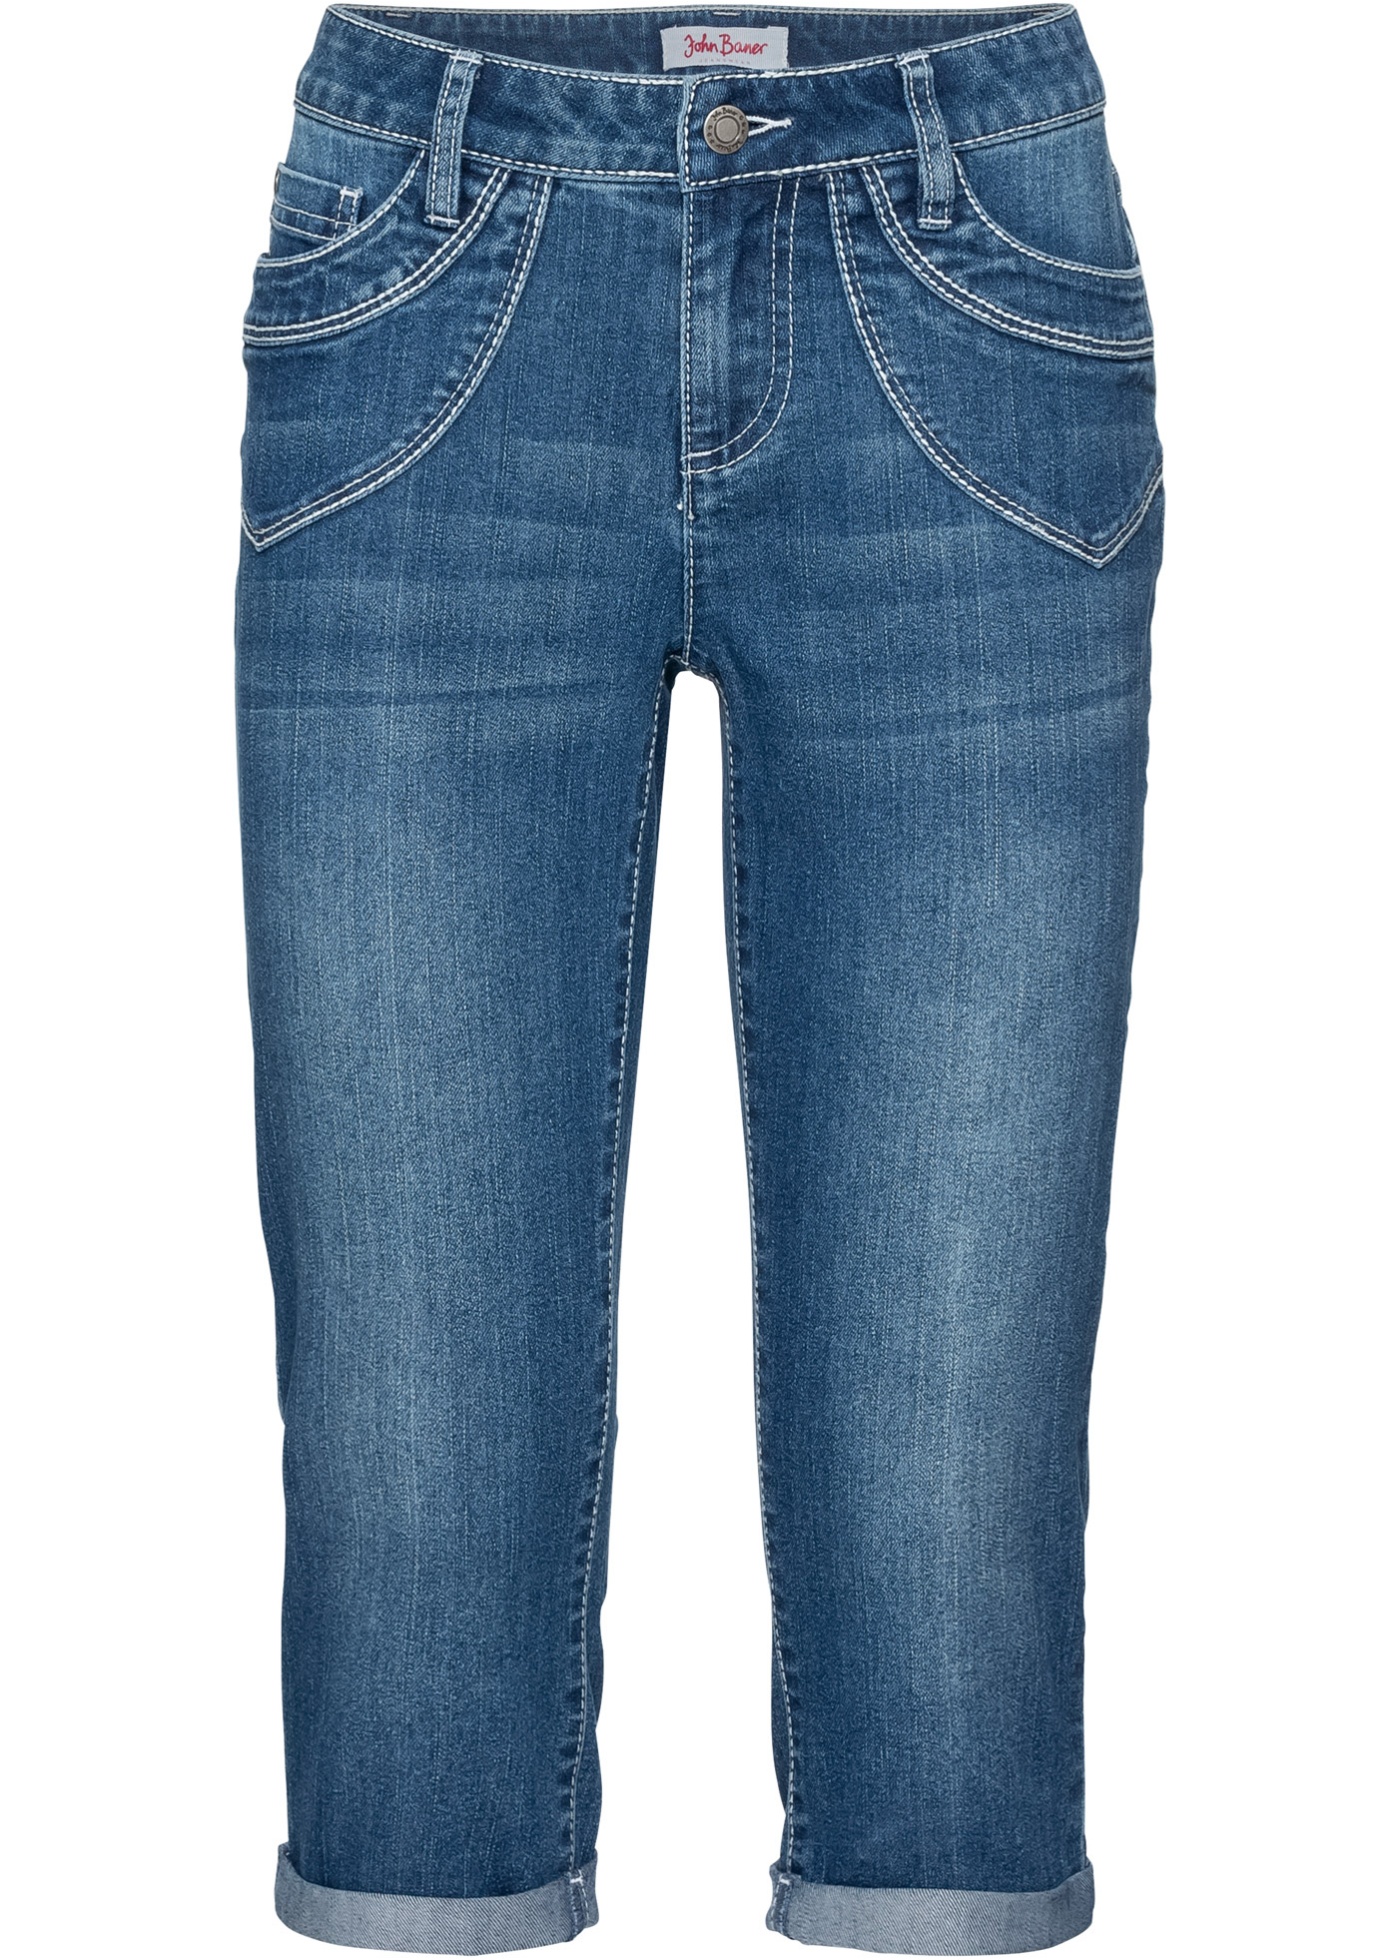 Comfort stretch capri jeans